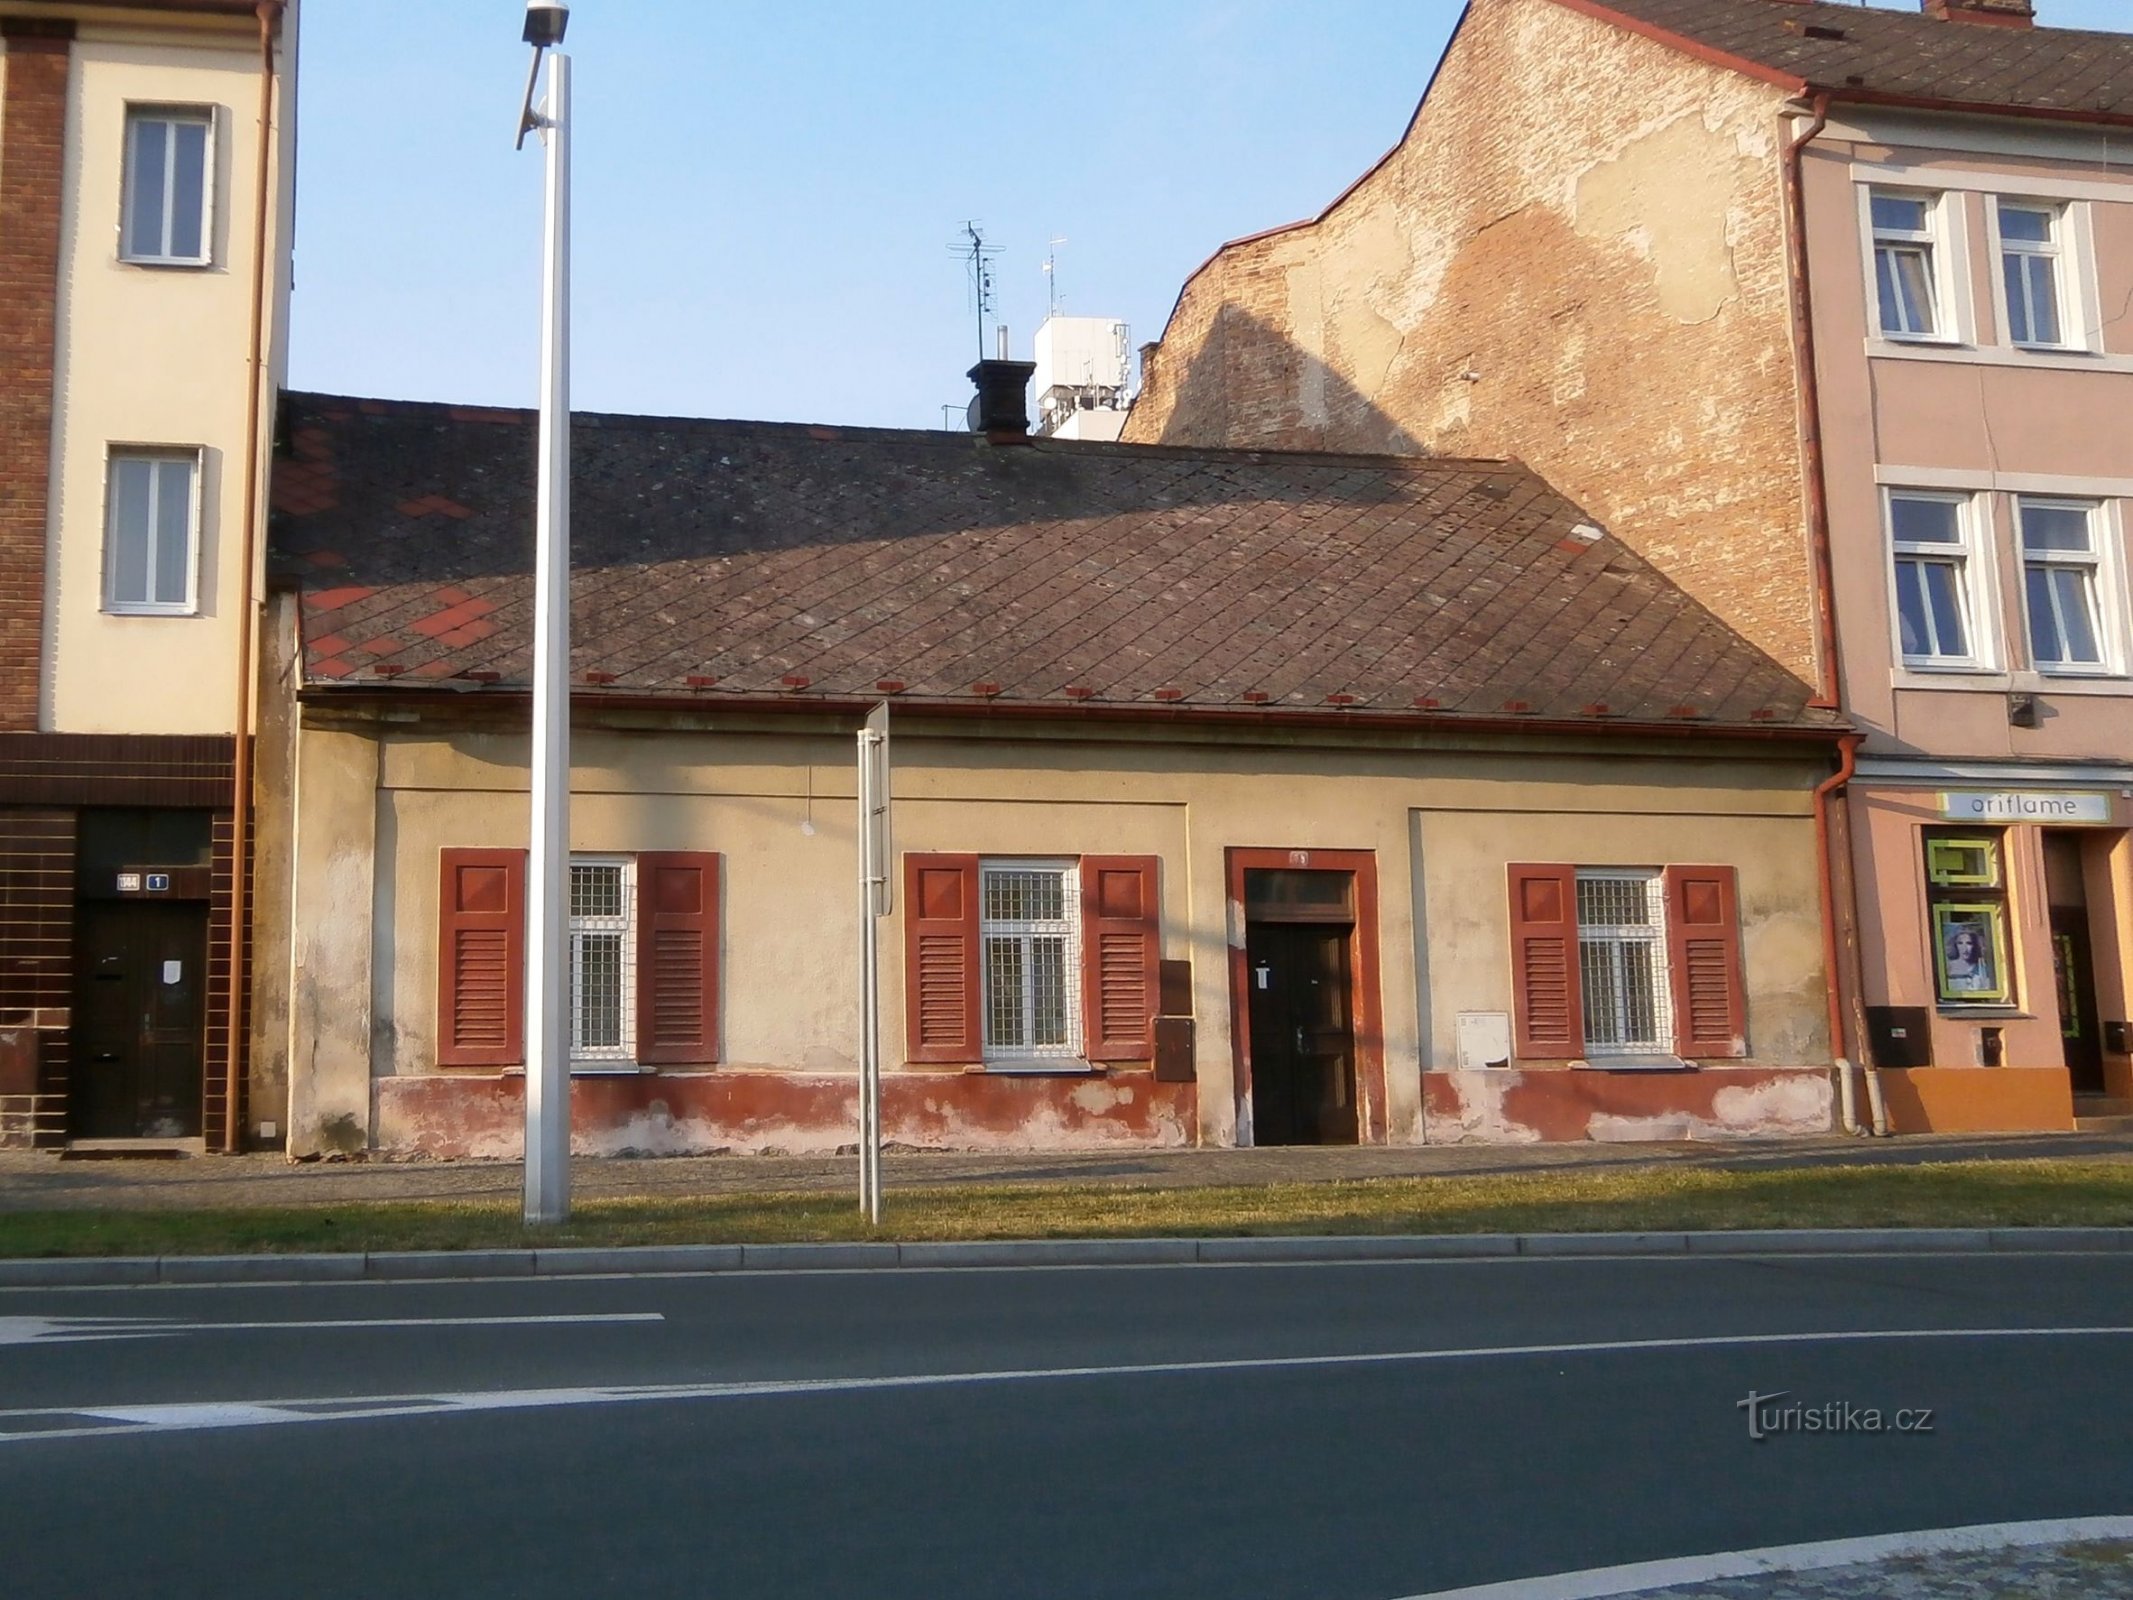 Trạm số 78 (Hradec Králové, 27.7.2014/XNUMX/XNUMX)